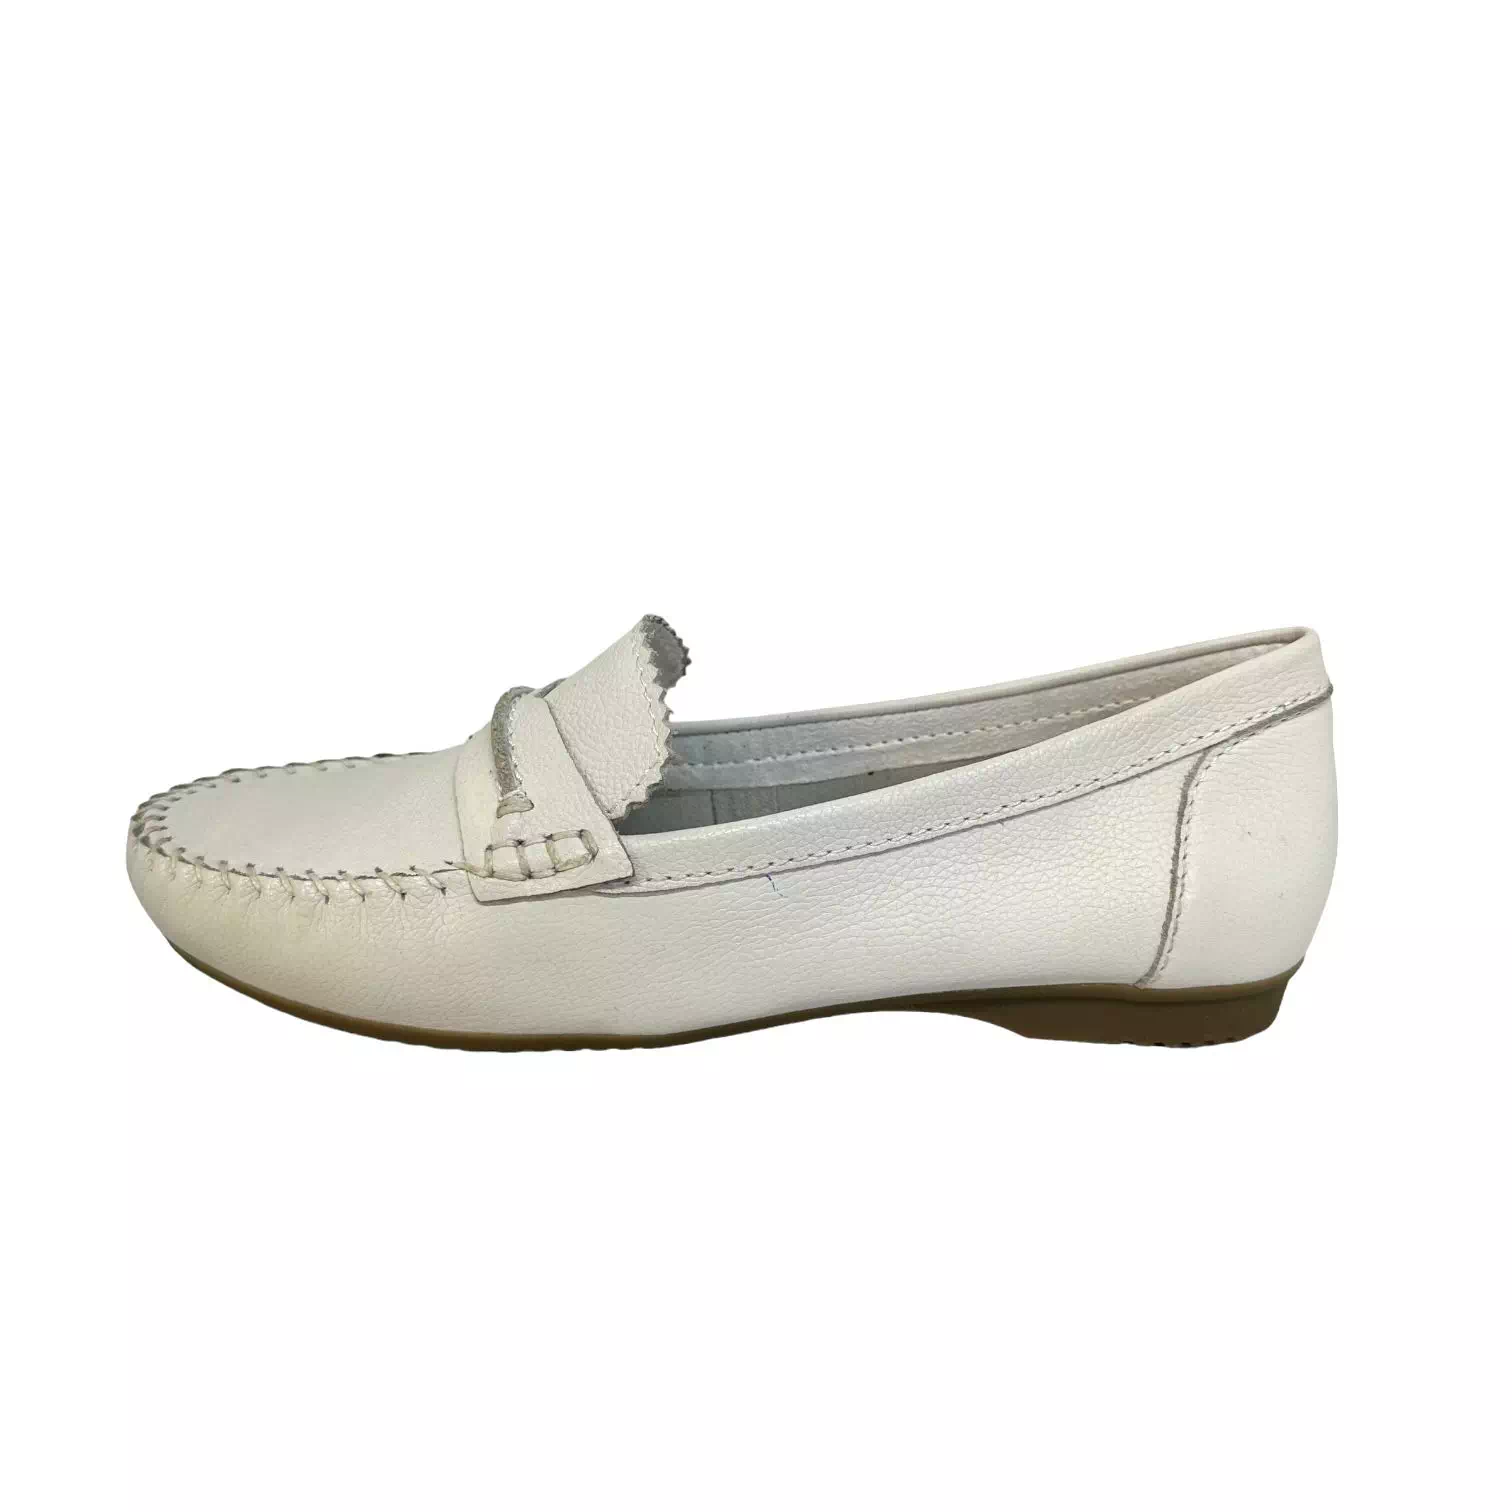 Pantofi Marco Tozzi albi cu detalii